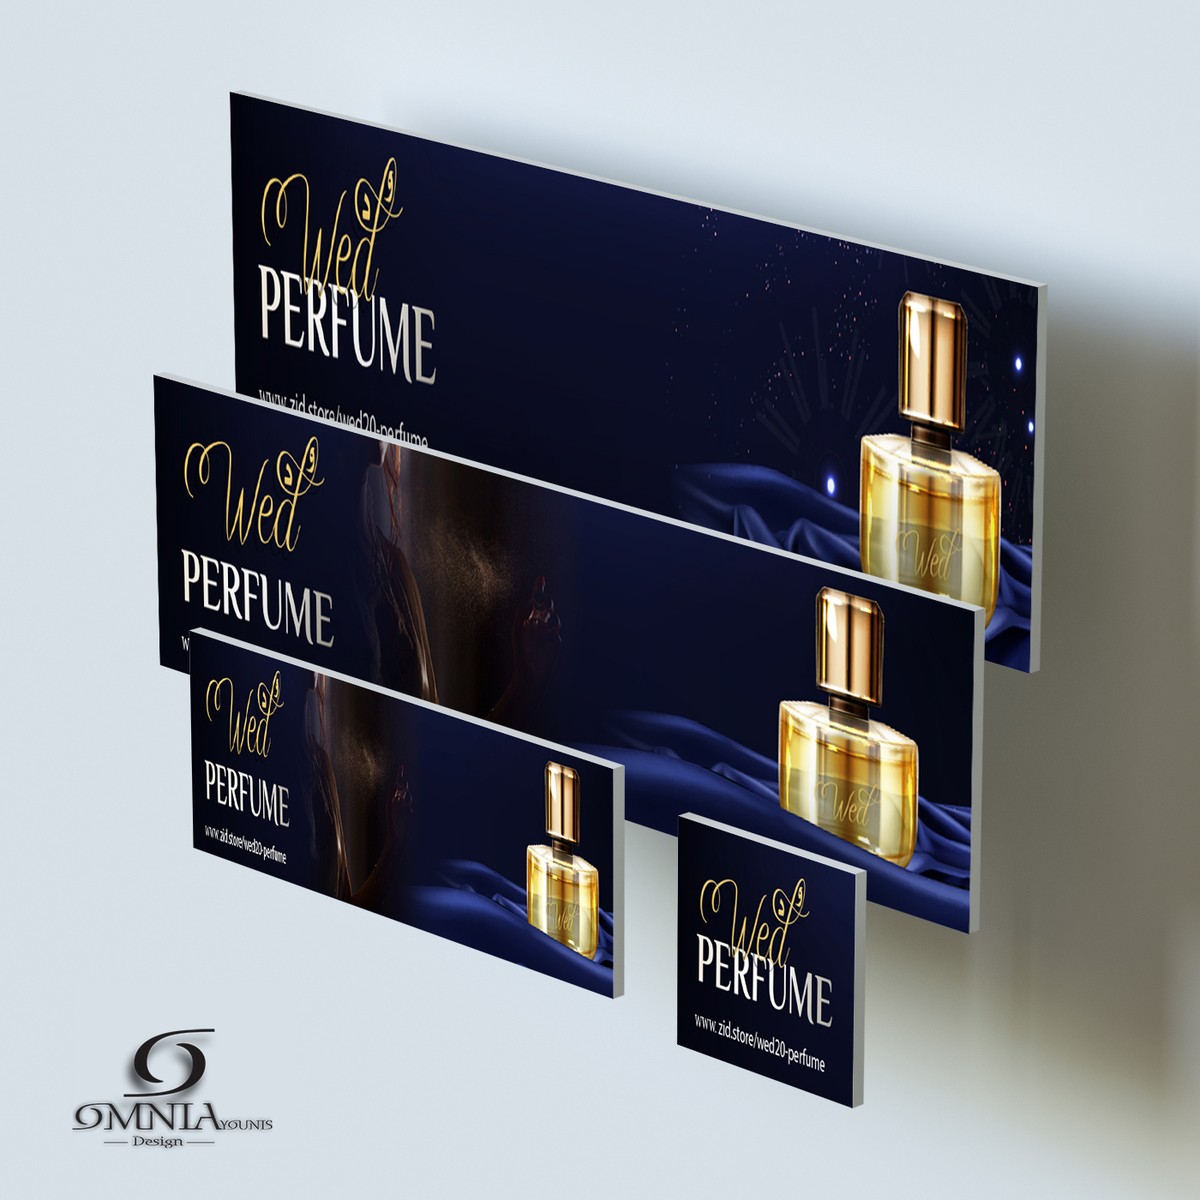 LOGO Design & تصميم غلاف للسوشيال ميديا الخاص لـ Wed Perfume